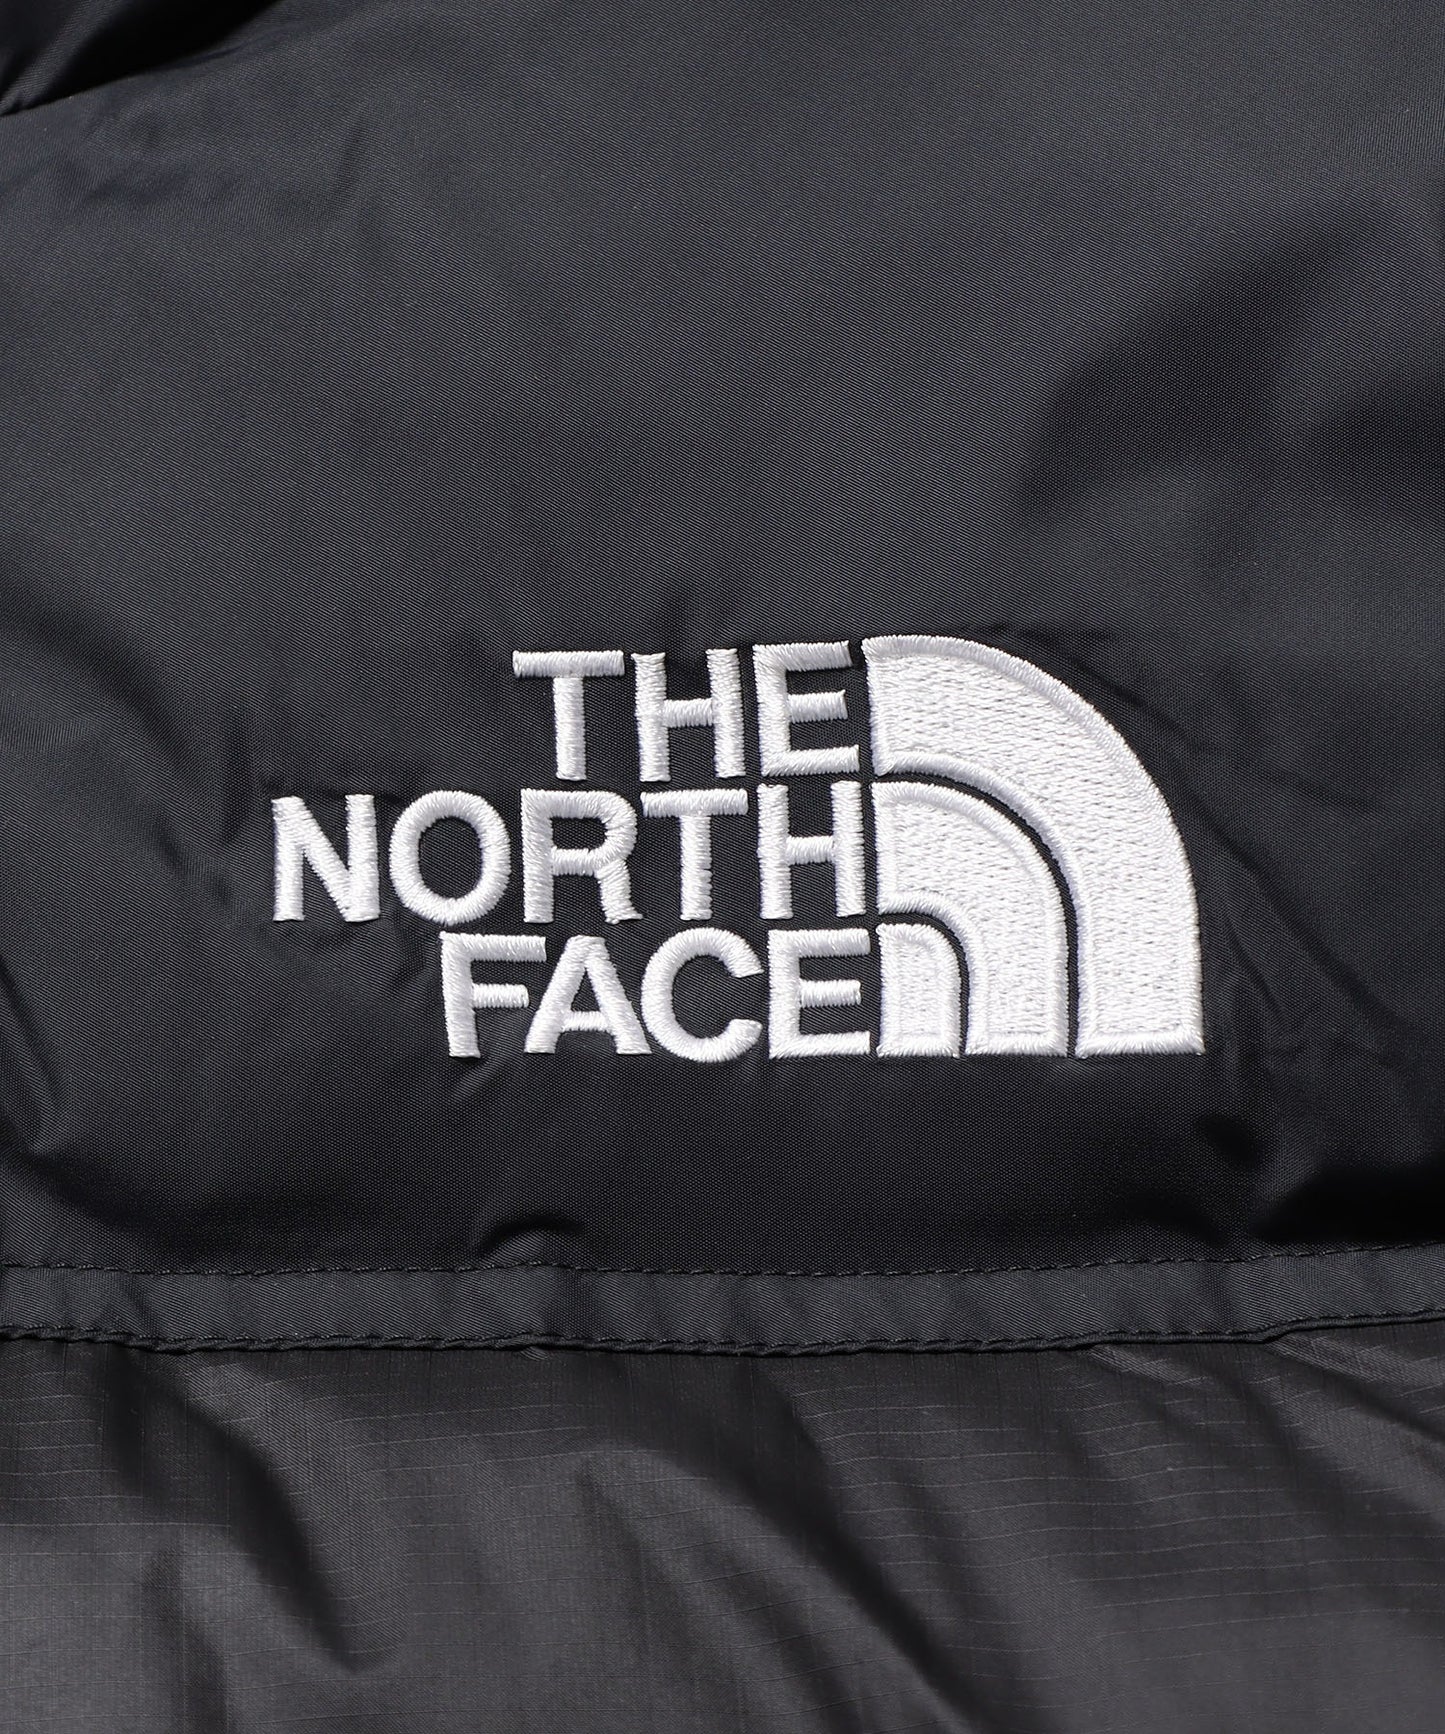 THE NORTH FACE/ザノースフェイス 1996 ECO NUPTSE JACKET